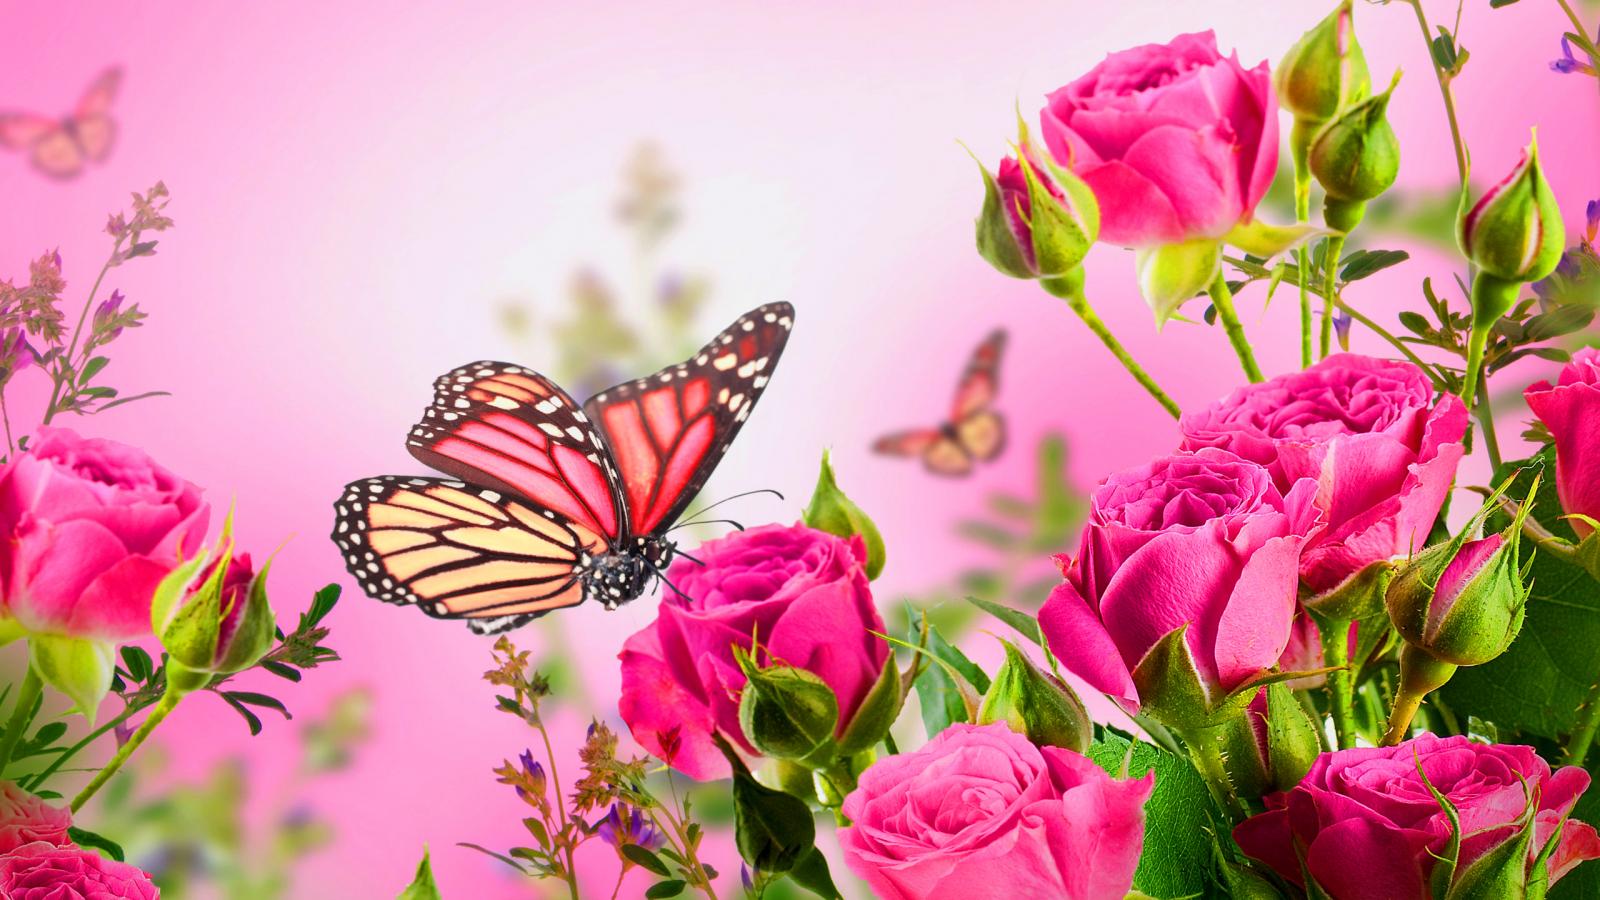 flowers and butterflies wallpaper,butterfly,pink,insect,moths and butterflies,flower